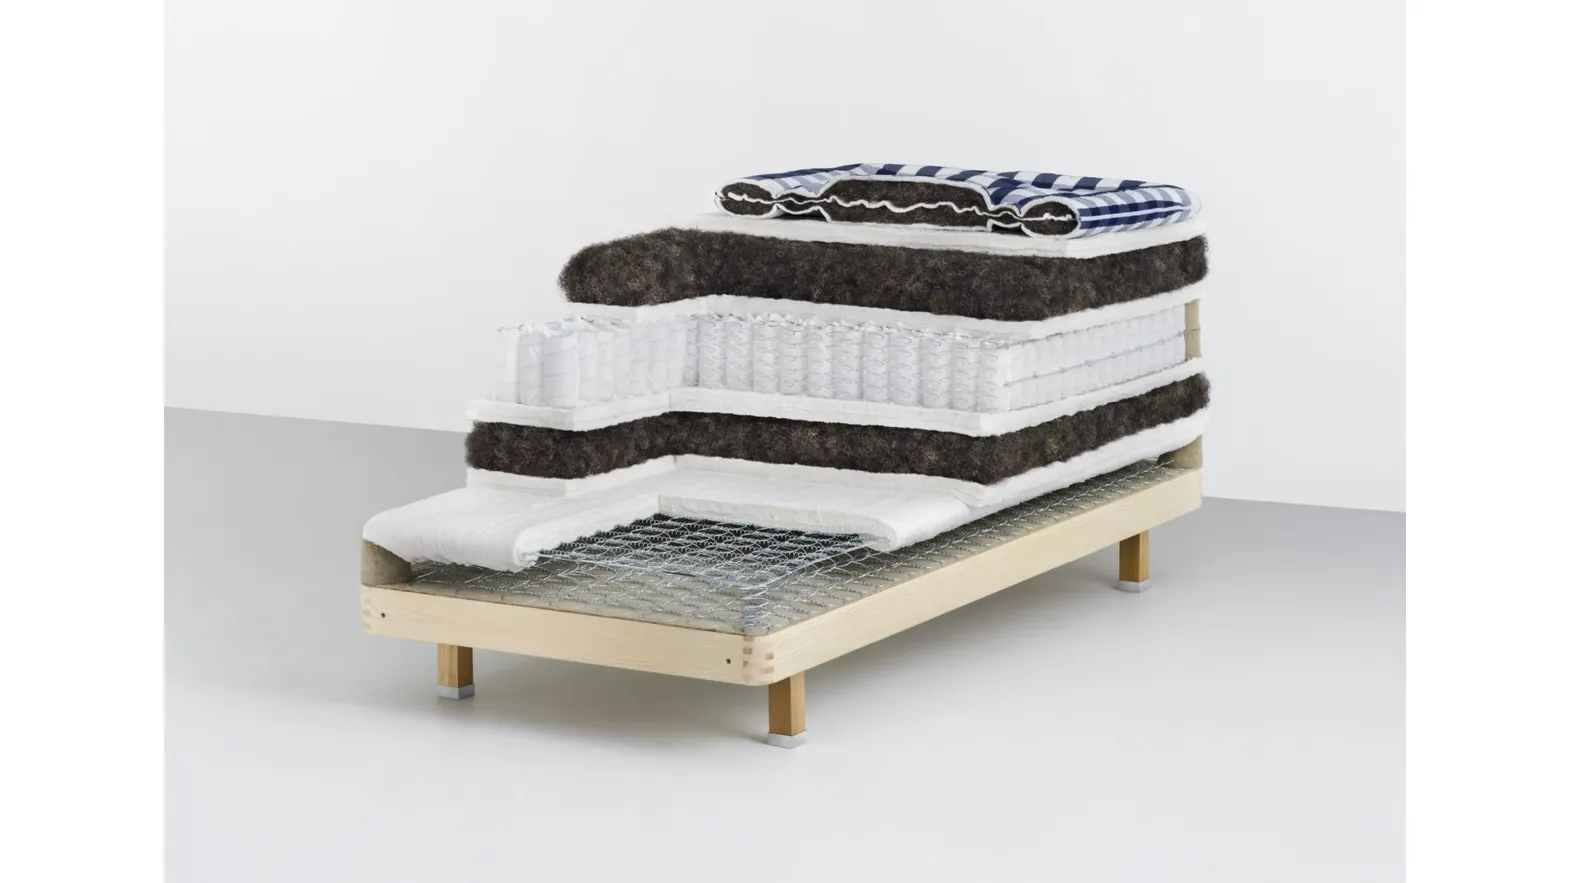 Maranga spring mattress by Hastens